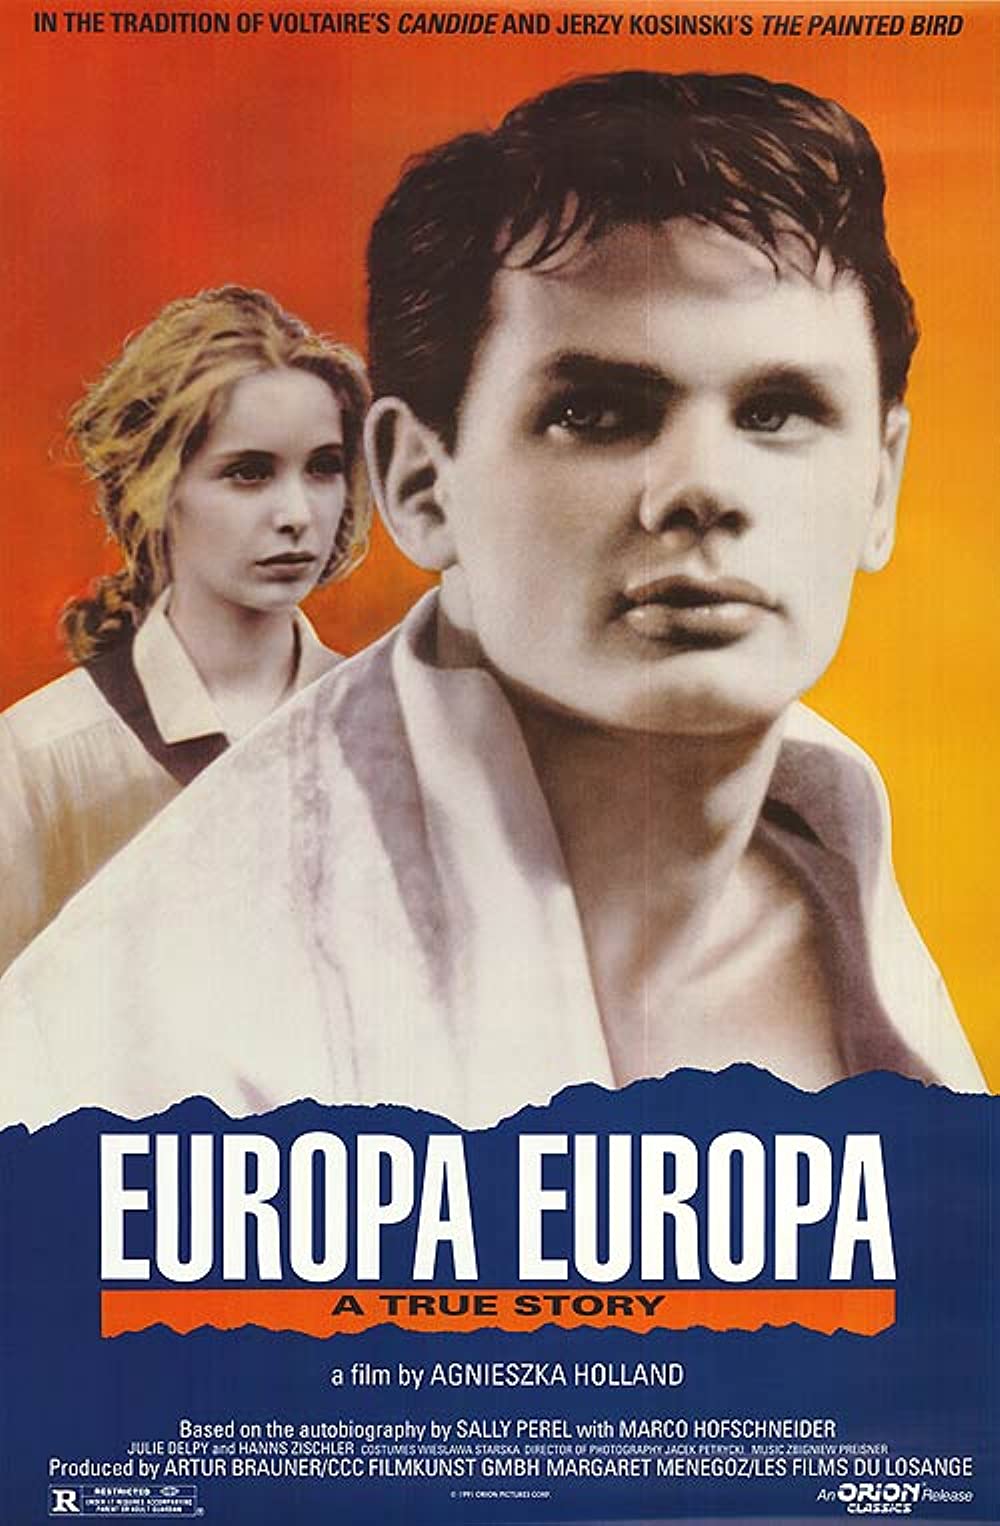 Filmbeschreibung zu Europa Europa